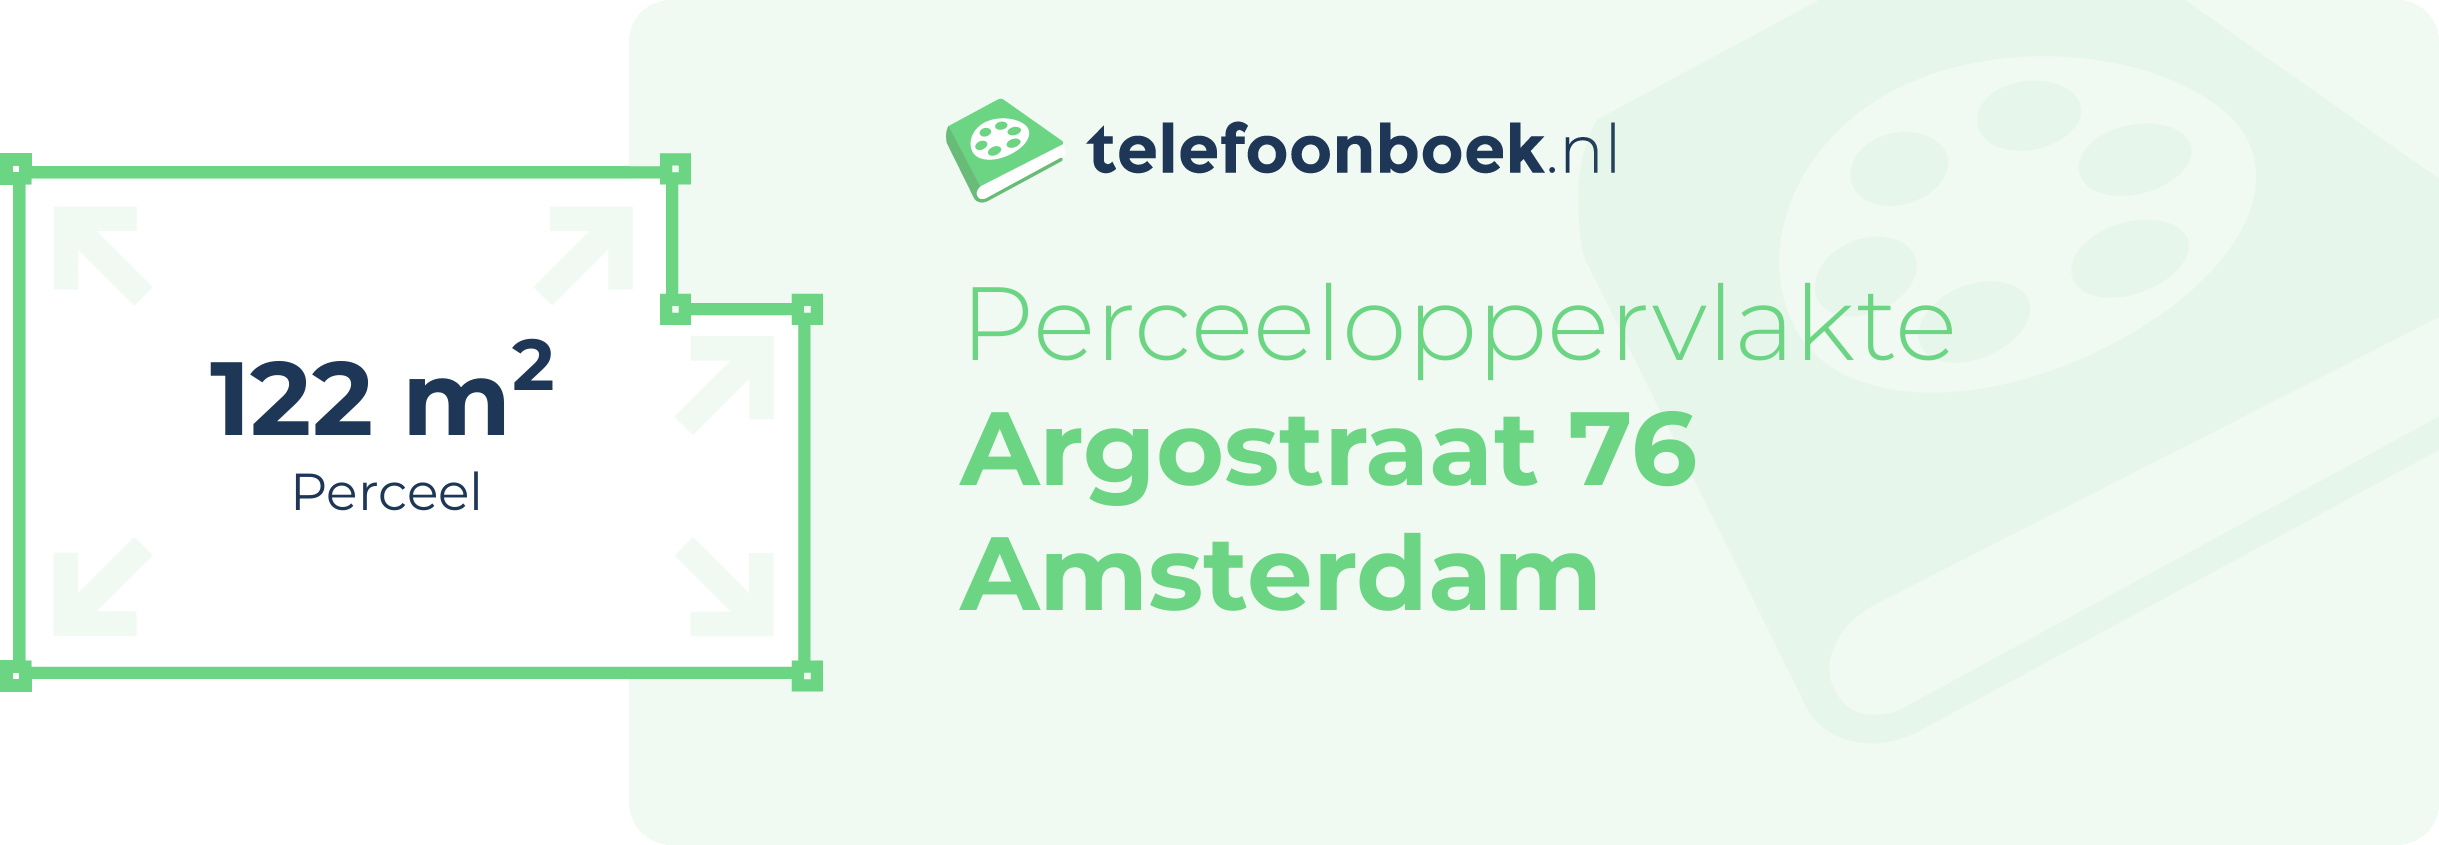 Perceeloppervlakte Argostraat 76 Amsterdam